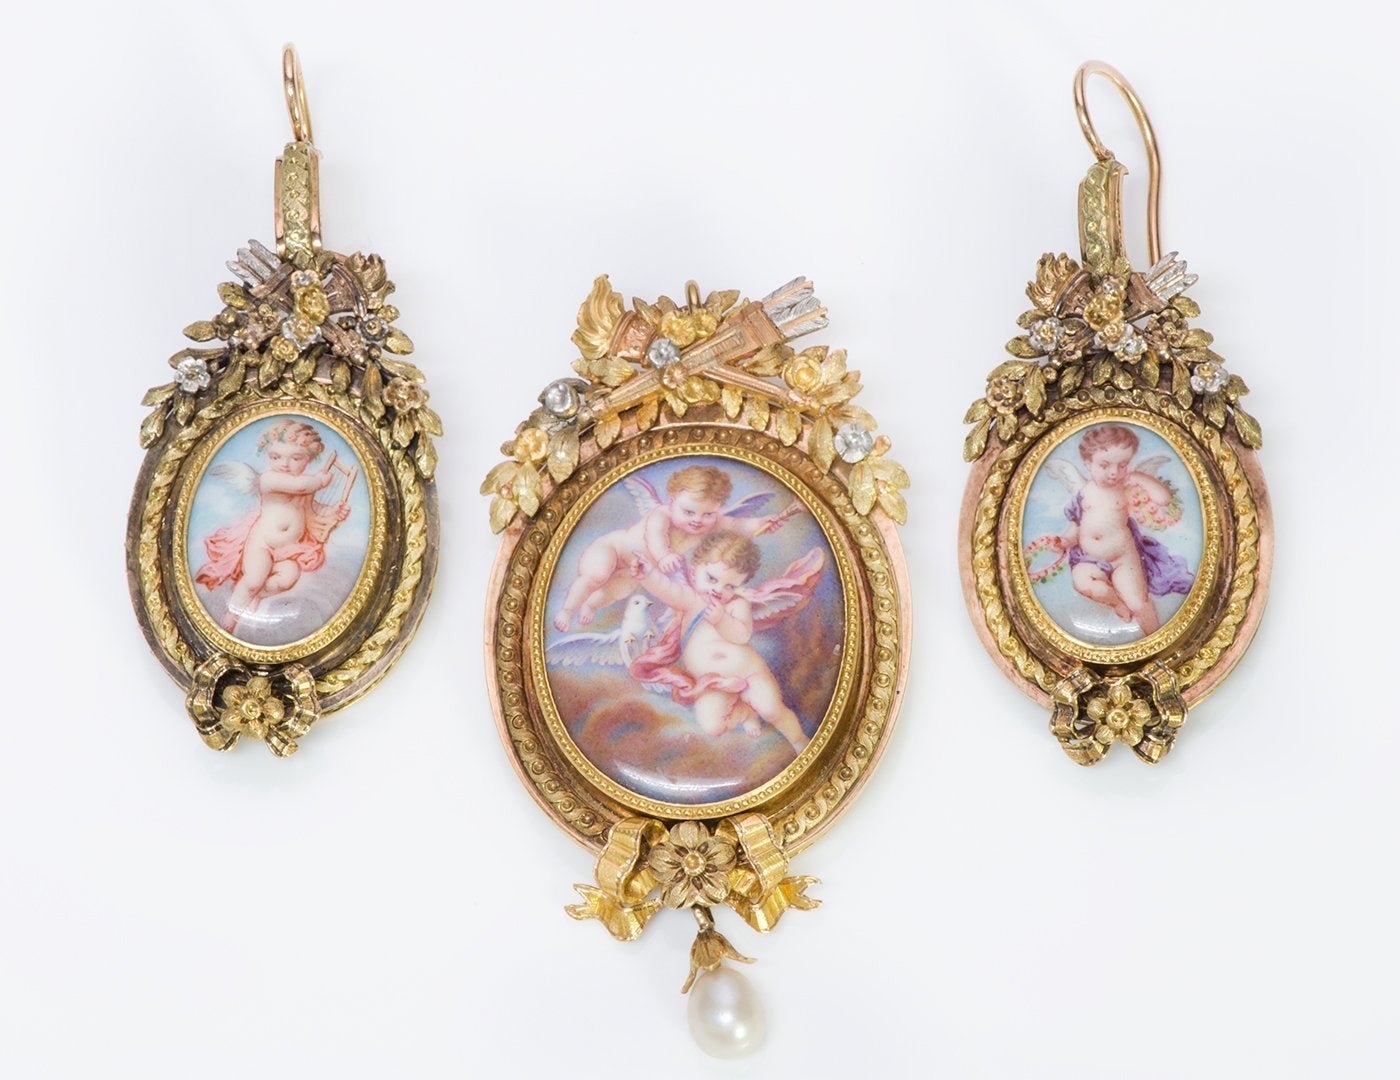 Antique French Gold Cupids Enamel Earrings Pendant Brooch